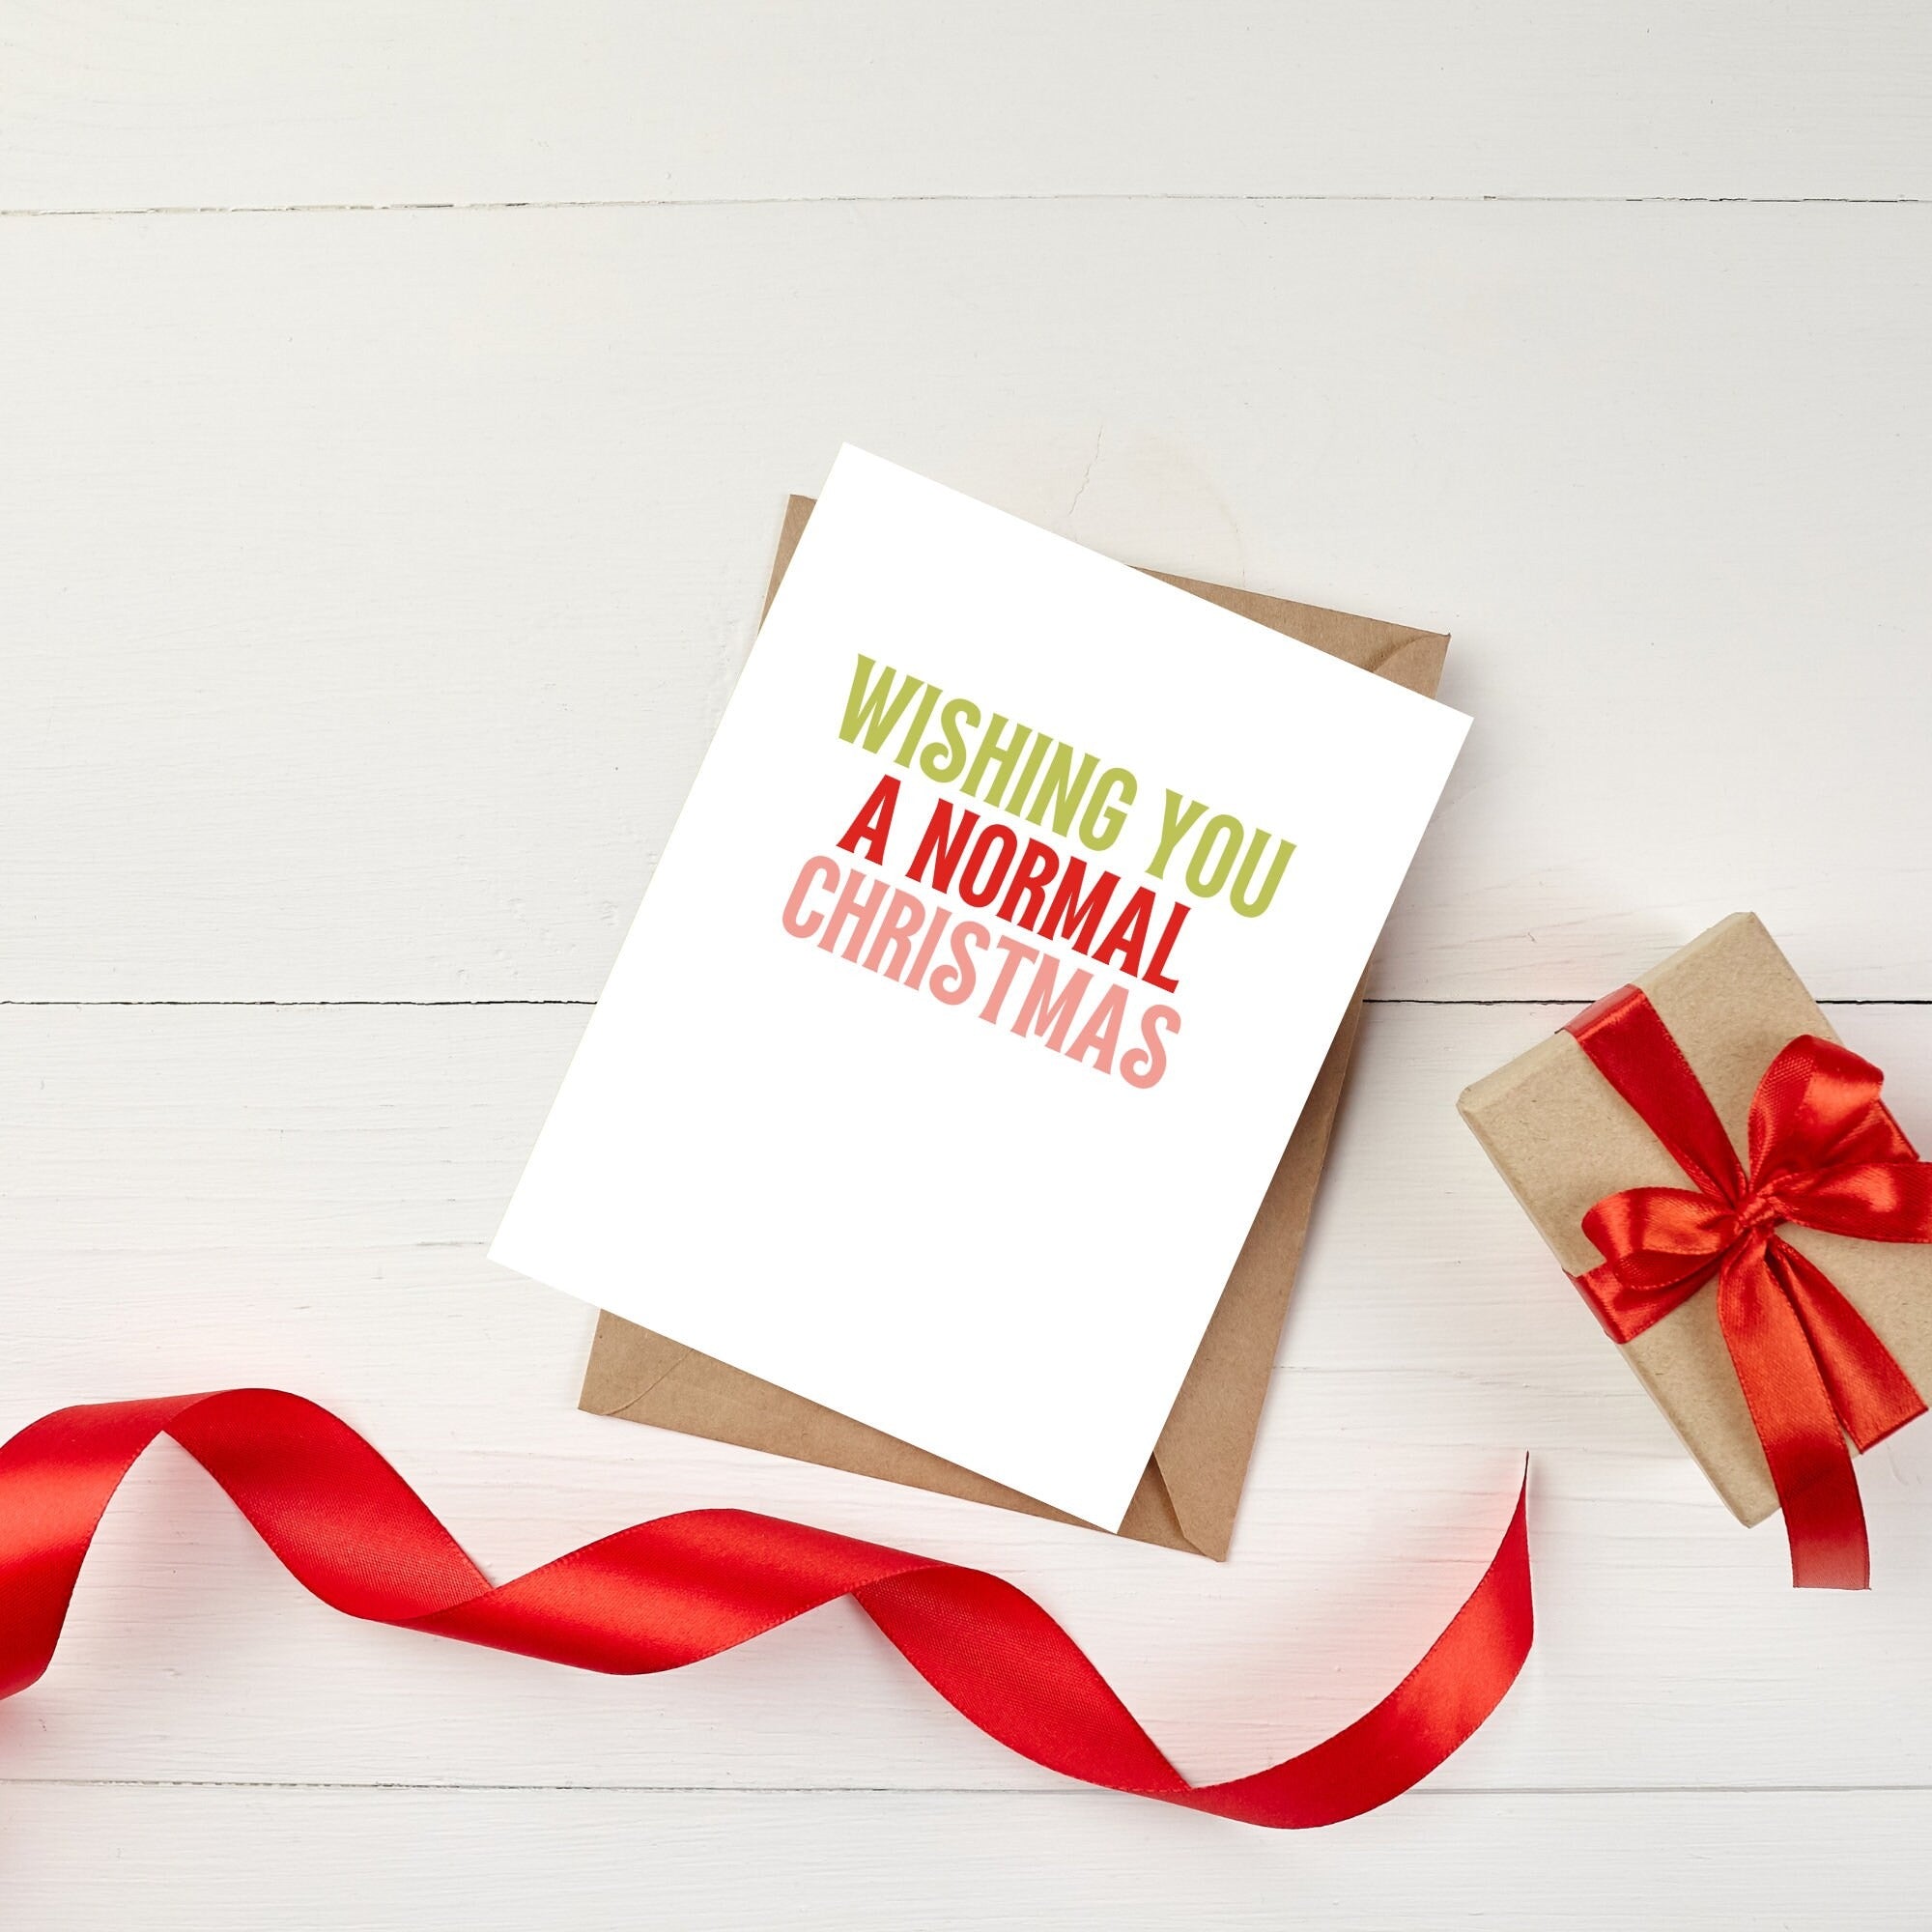 Wishing You A Normal Christmas Card